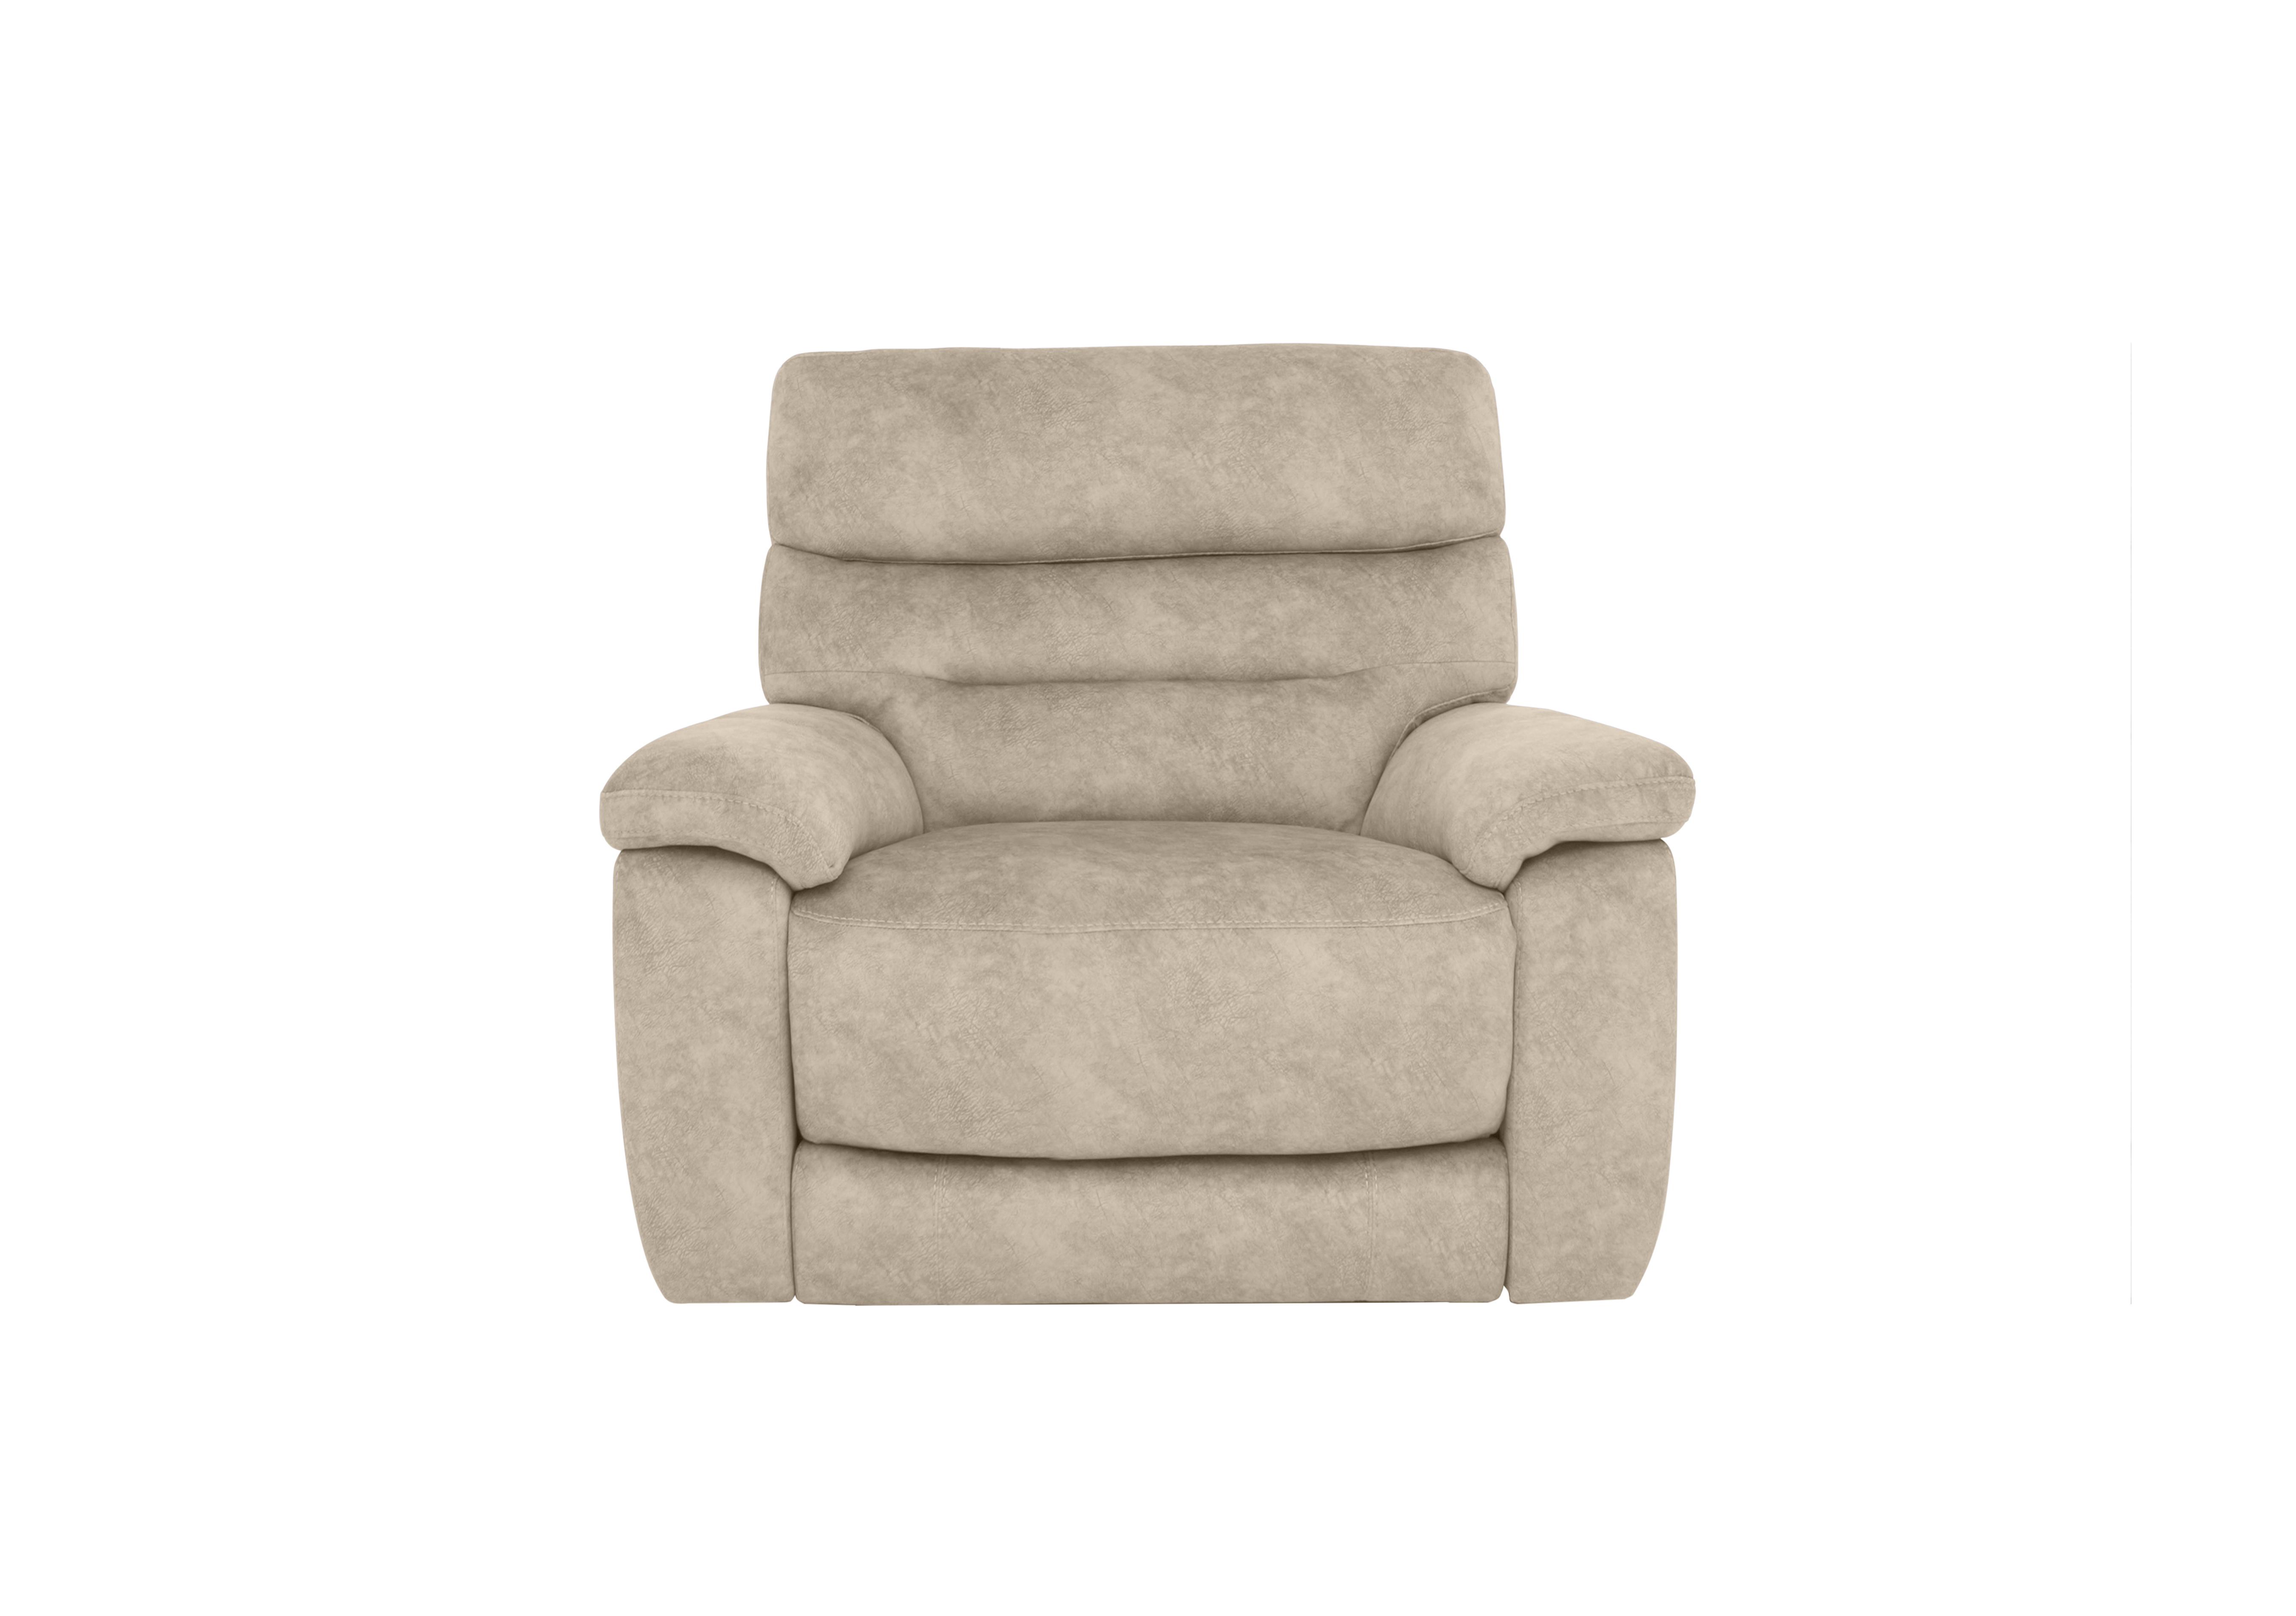 Nimbus Fabric Power Recliner Chair with Power Headrest and Power Lumbar in Bfa-Bnn-R26 Cream on Furniture Village